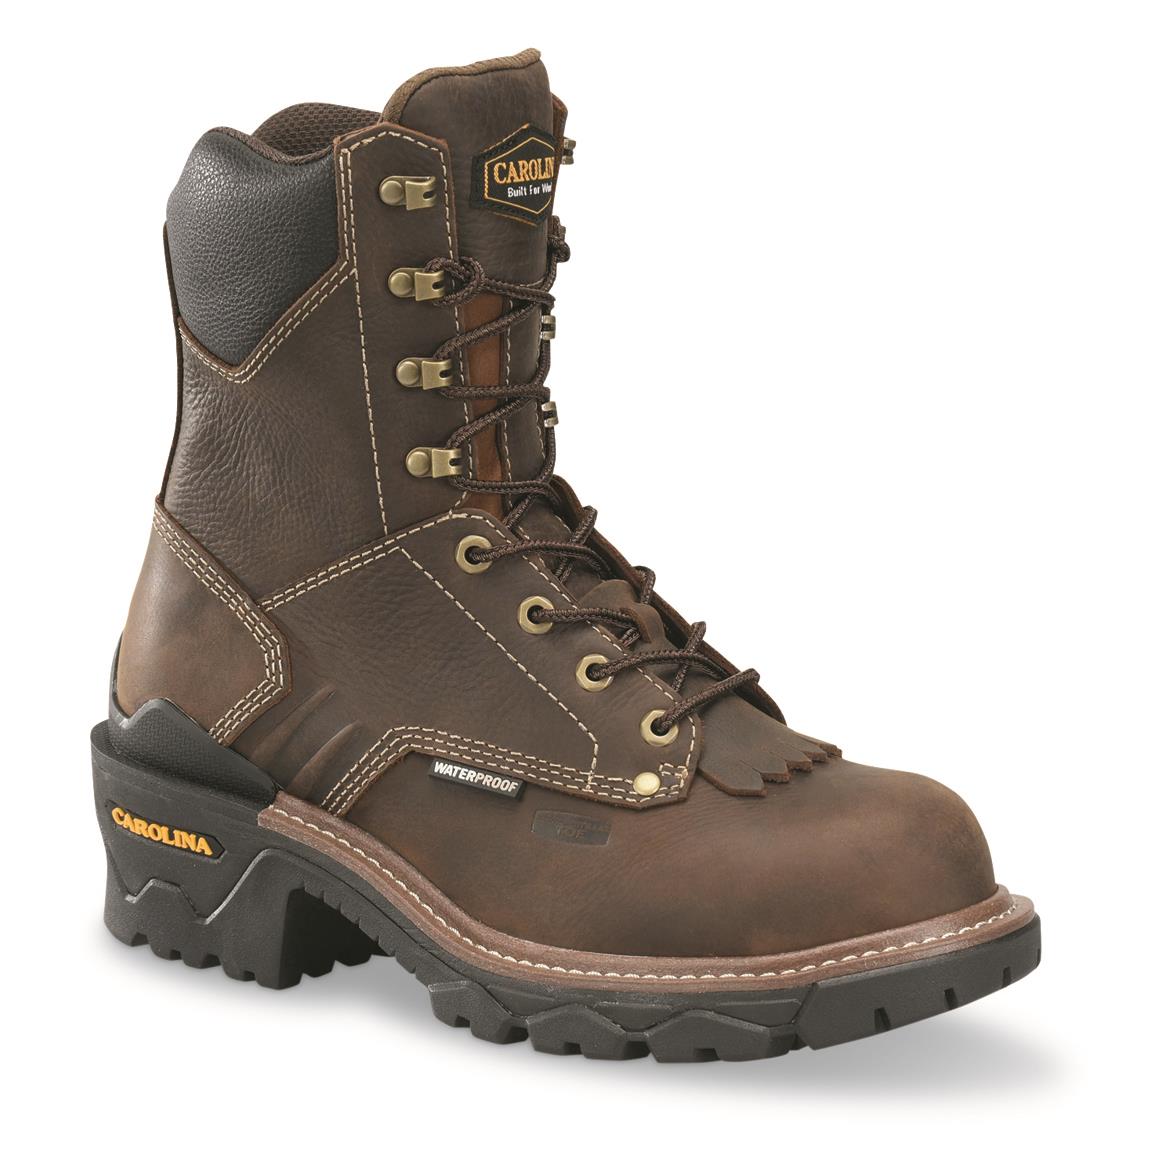 Carolina Men's Capacity 7837 8" Waterproof Composite Toe Logger Work Boots, Brown